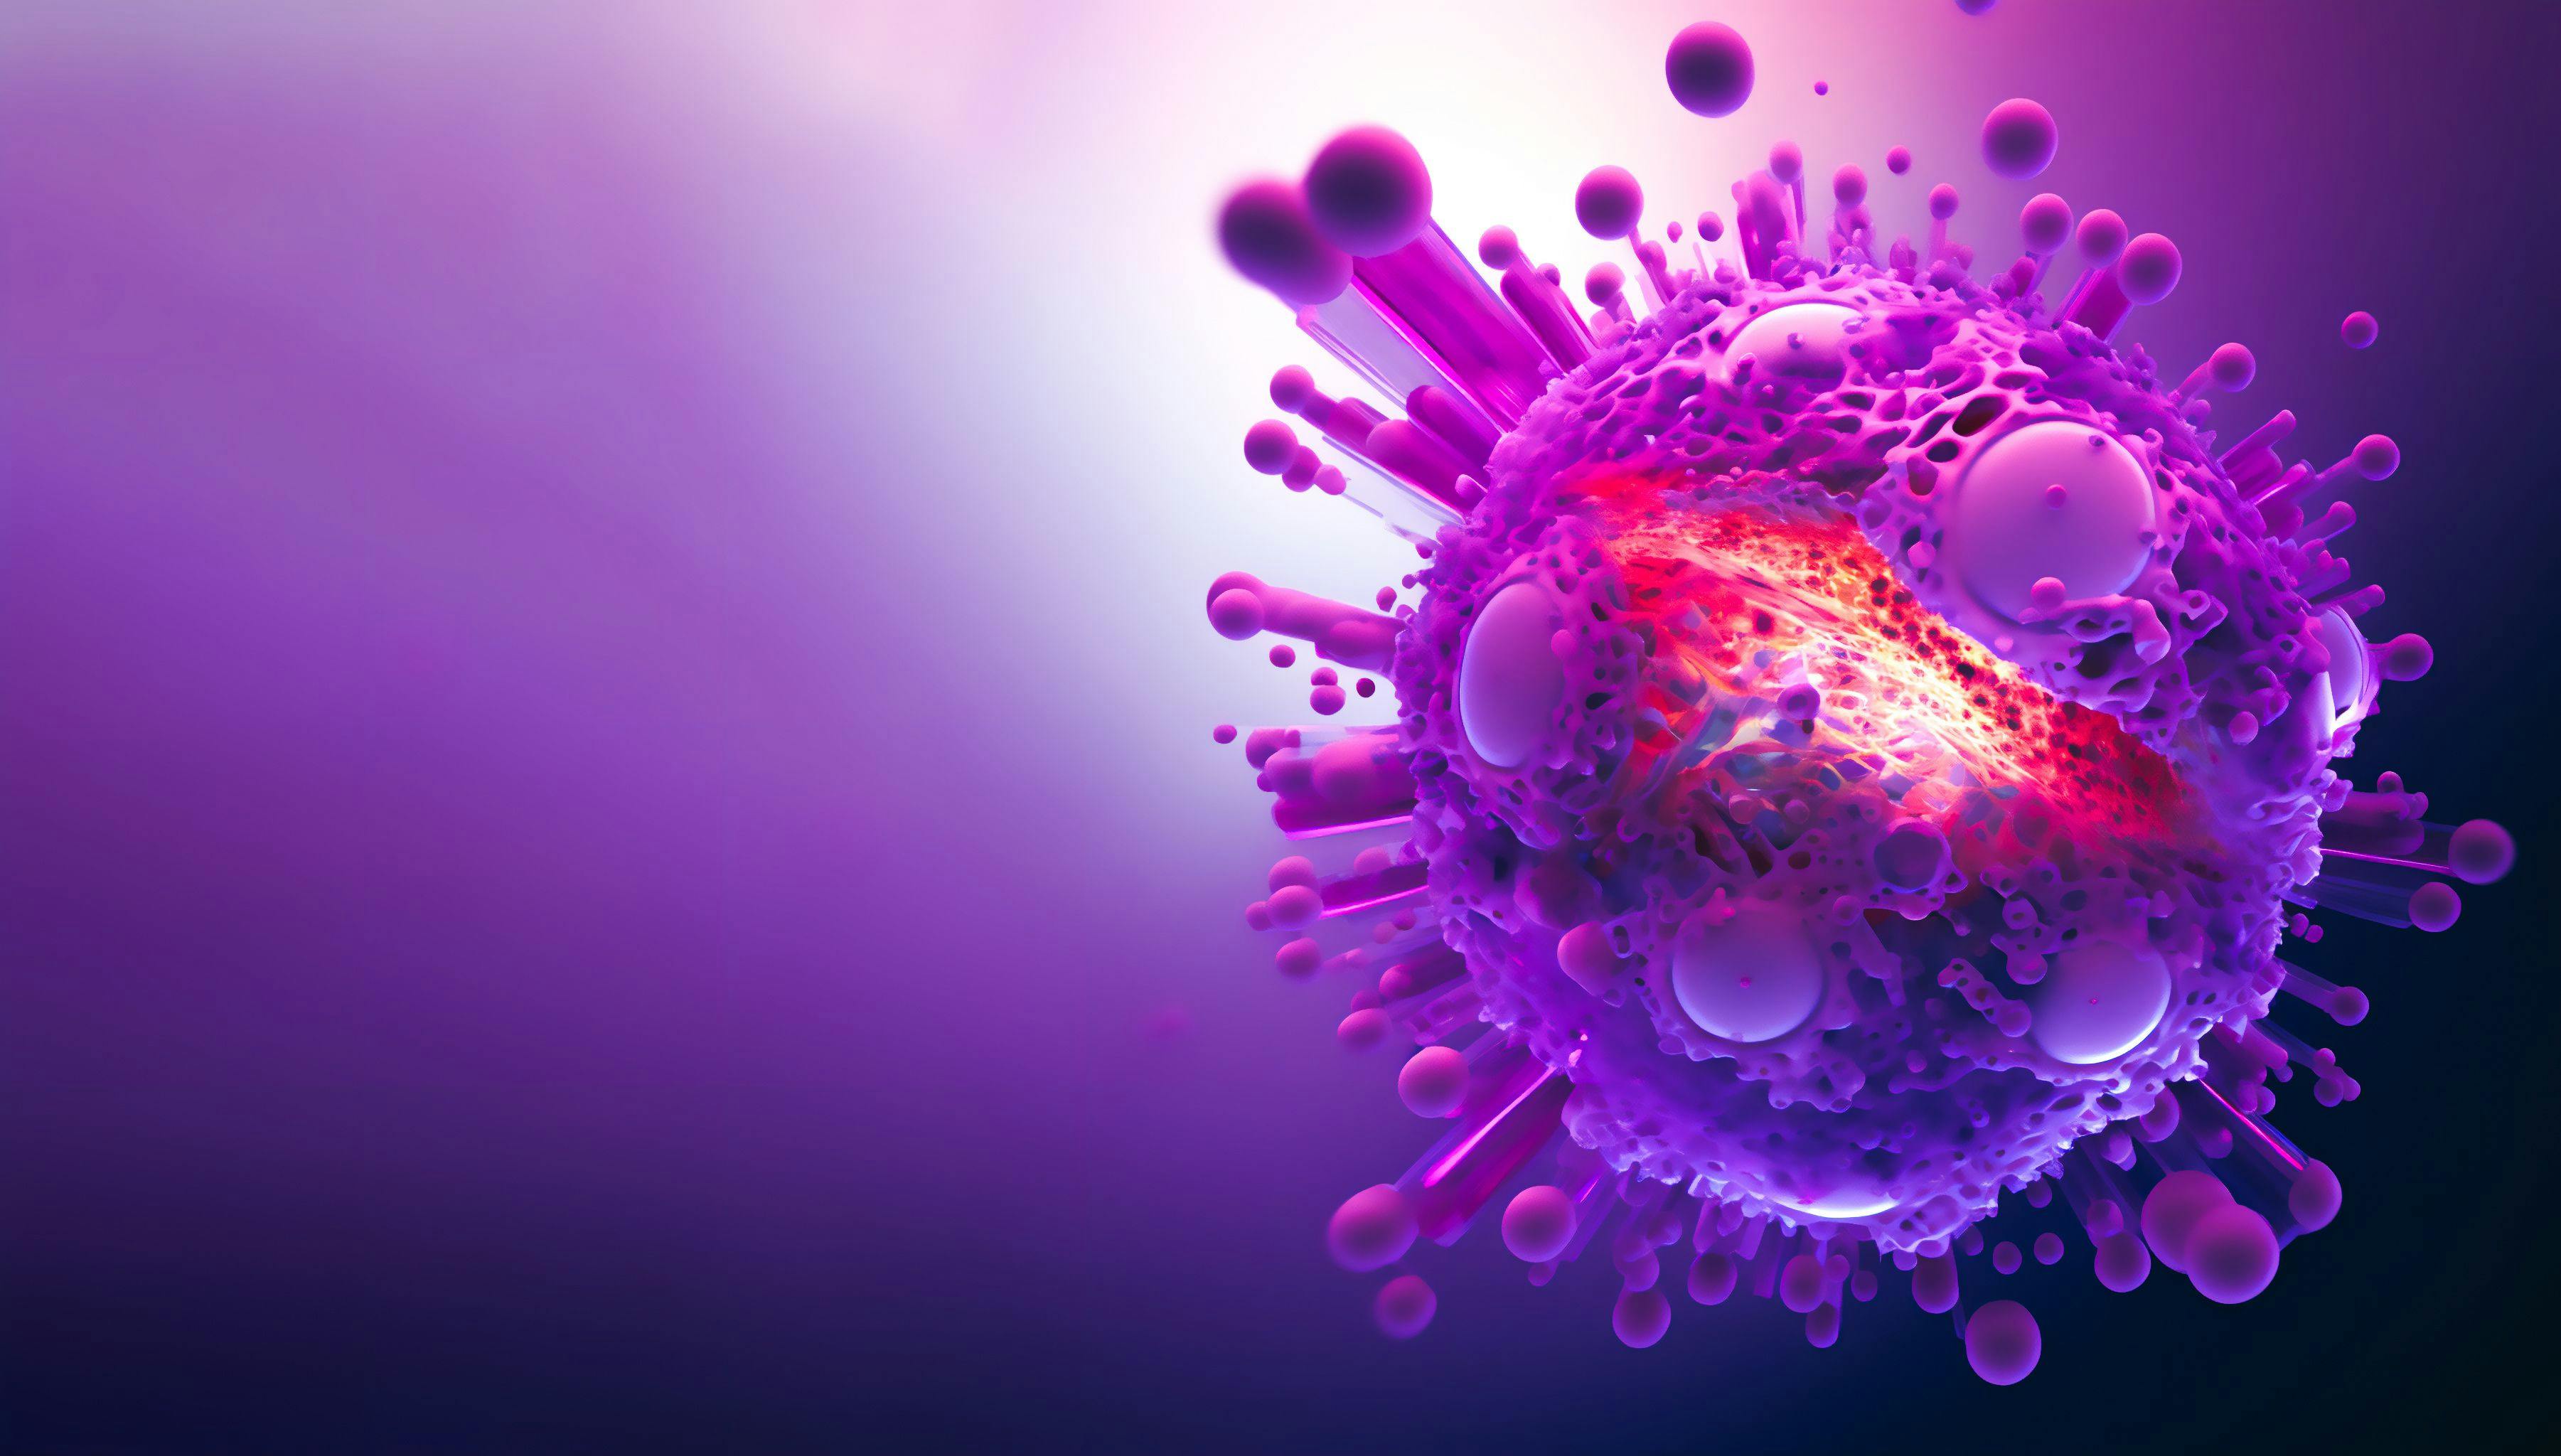 RSV virus | Image Credit: catalin - stock.adobe.com